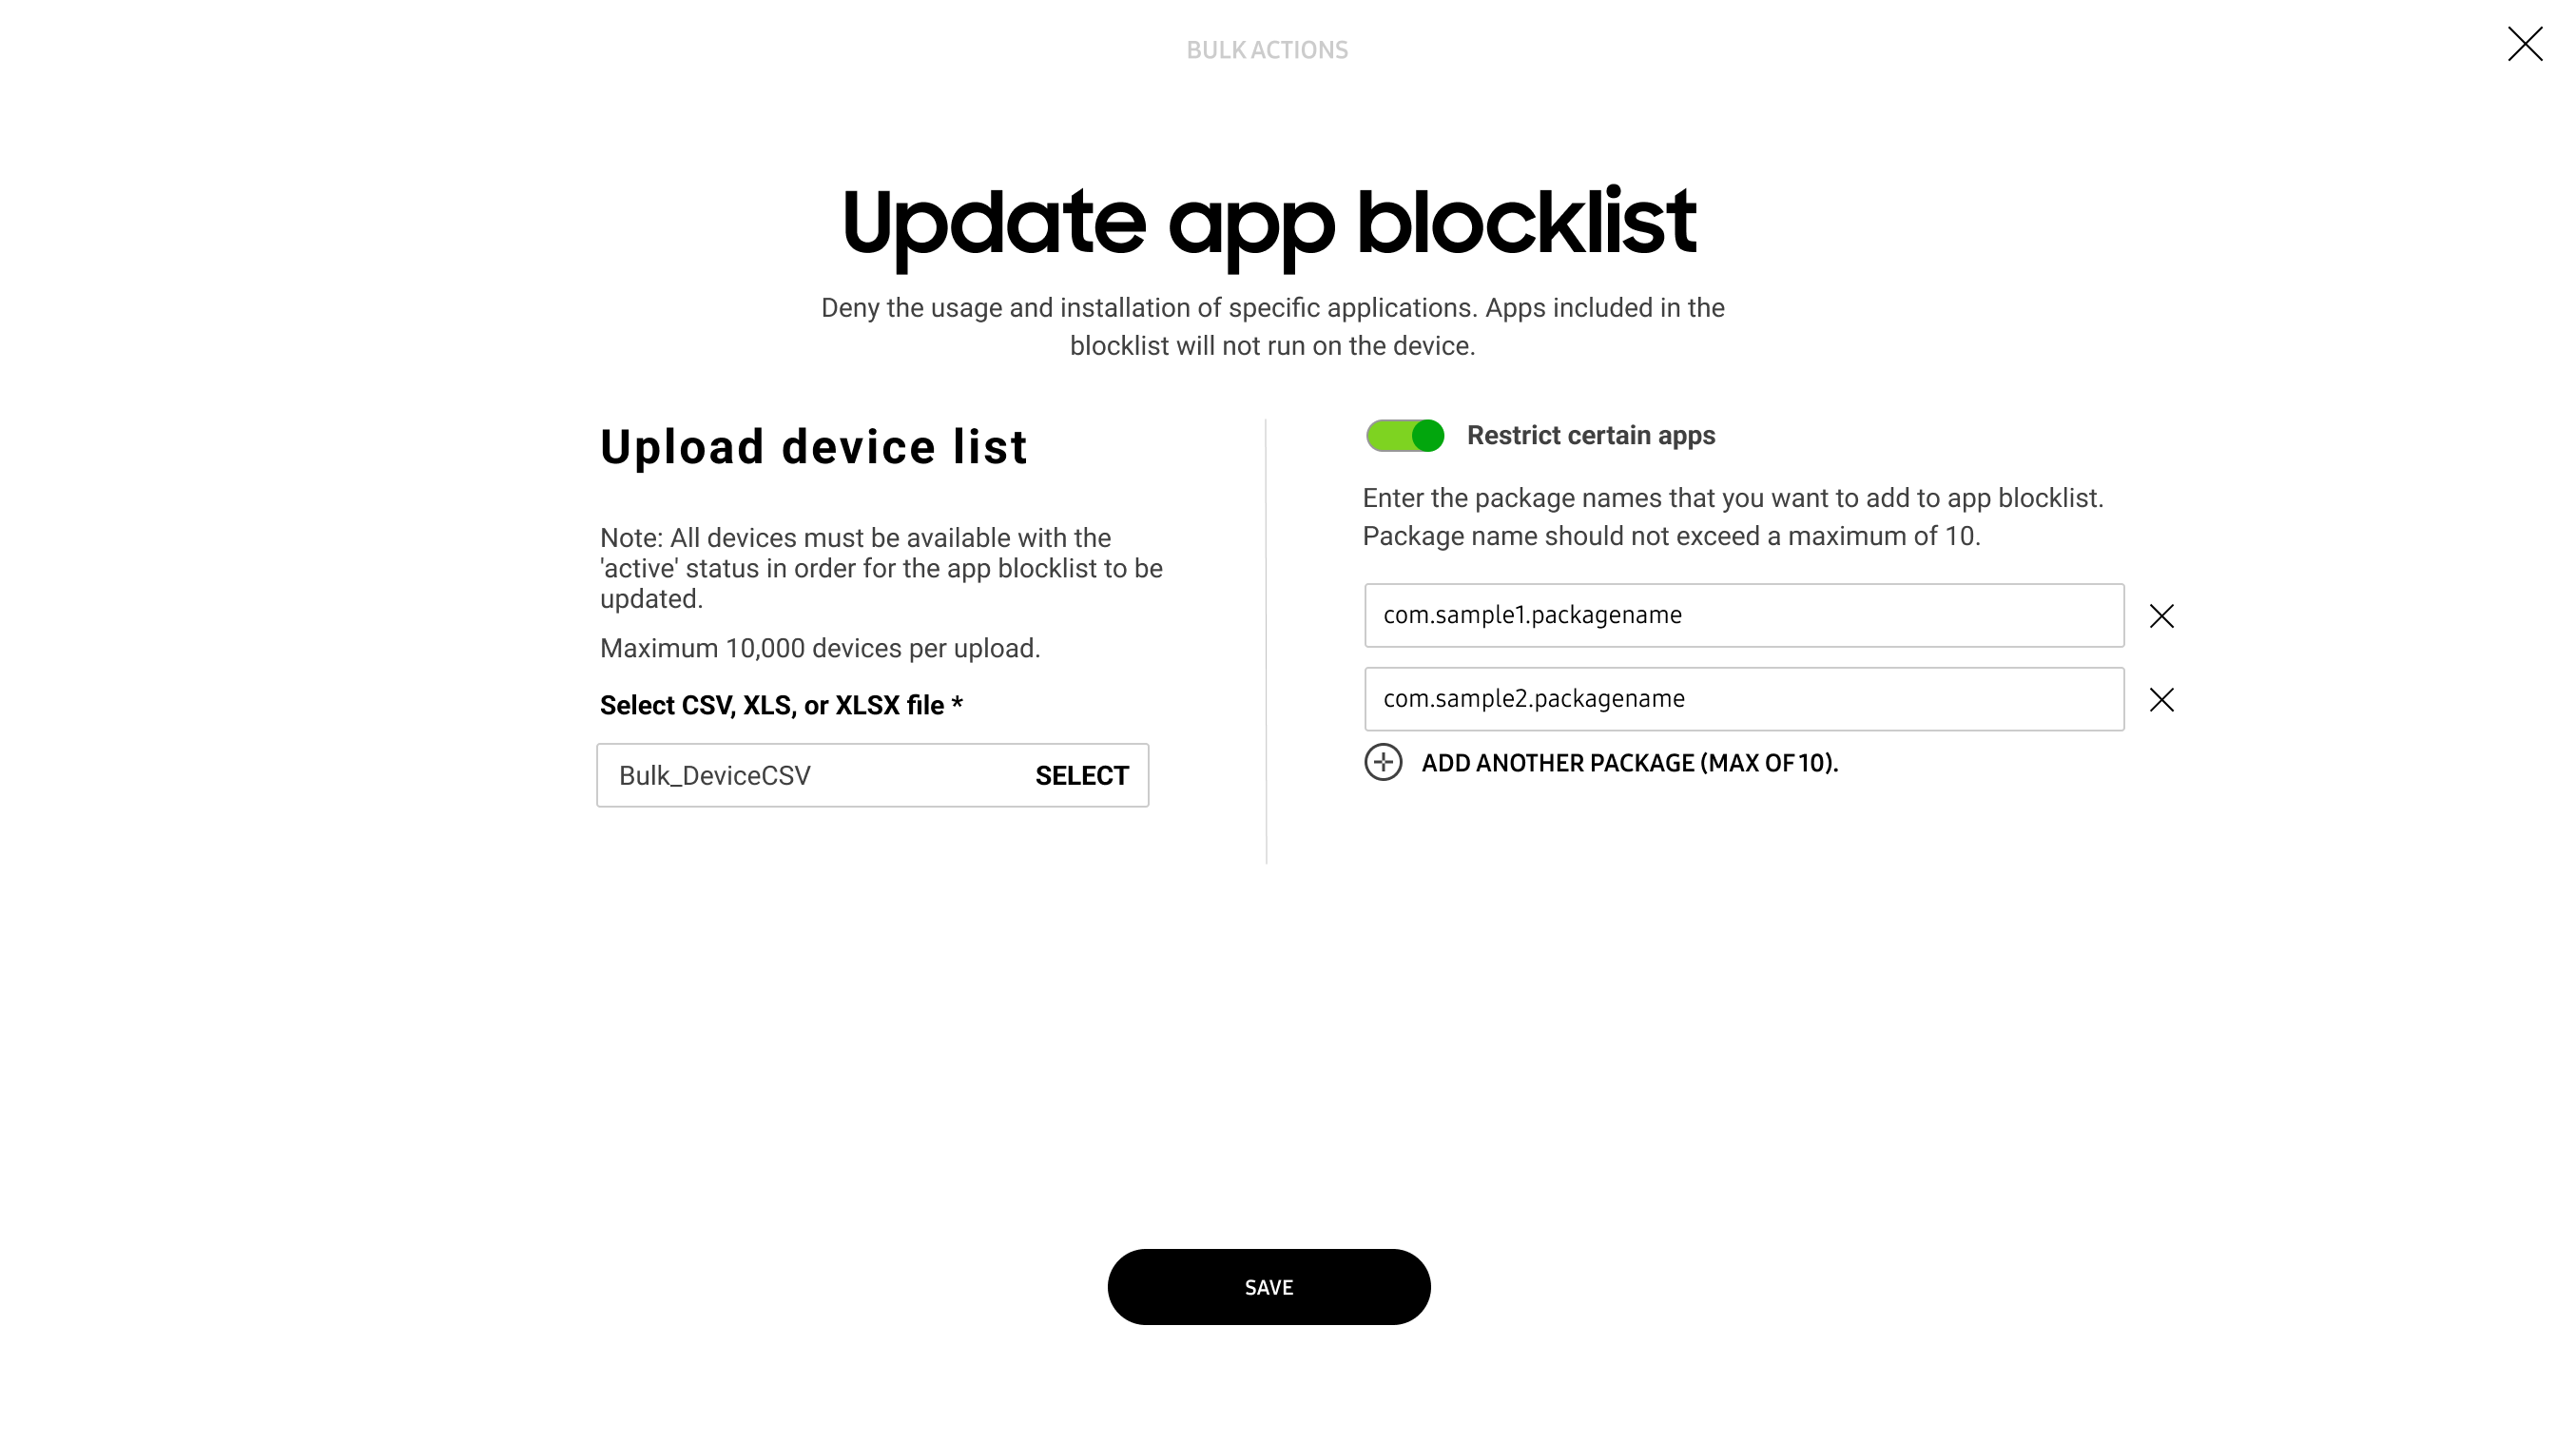 Update app blocklist bulk actions screen